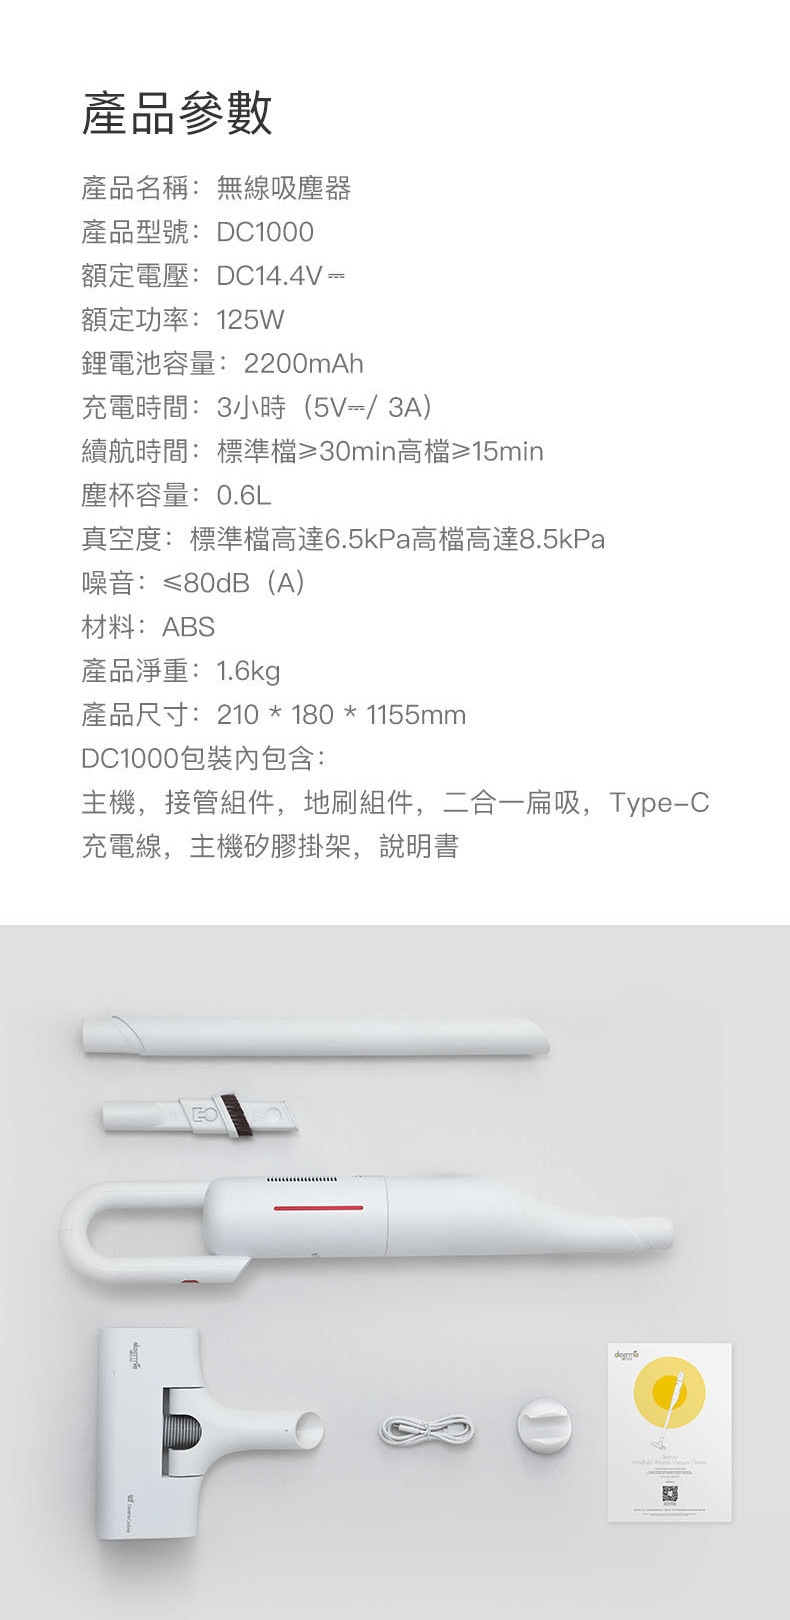 Deerma 無線手持式吸塵器 超輕大吸力吸塵機 Type-C 香港特別版 (DC1000)